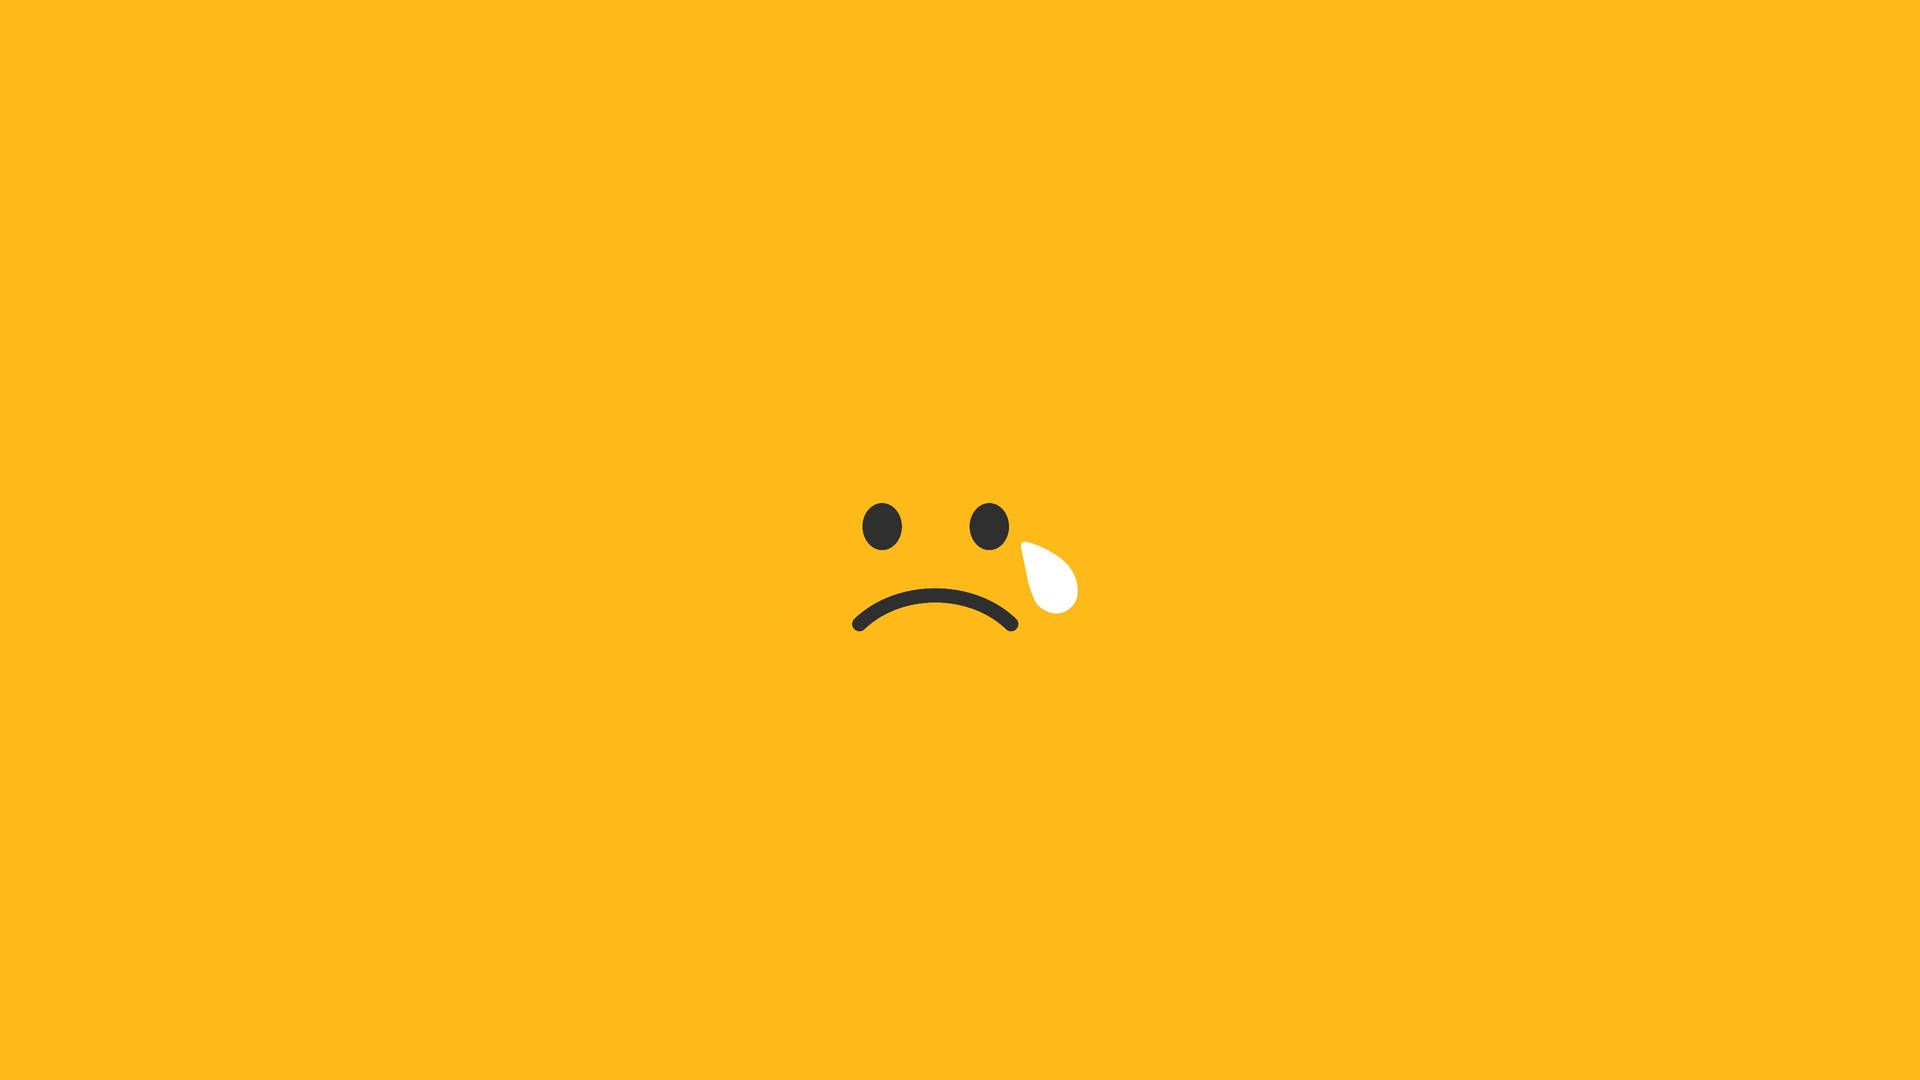 A sad face on a yellow background - Sad, light yellow